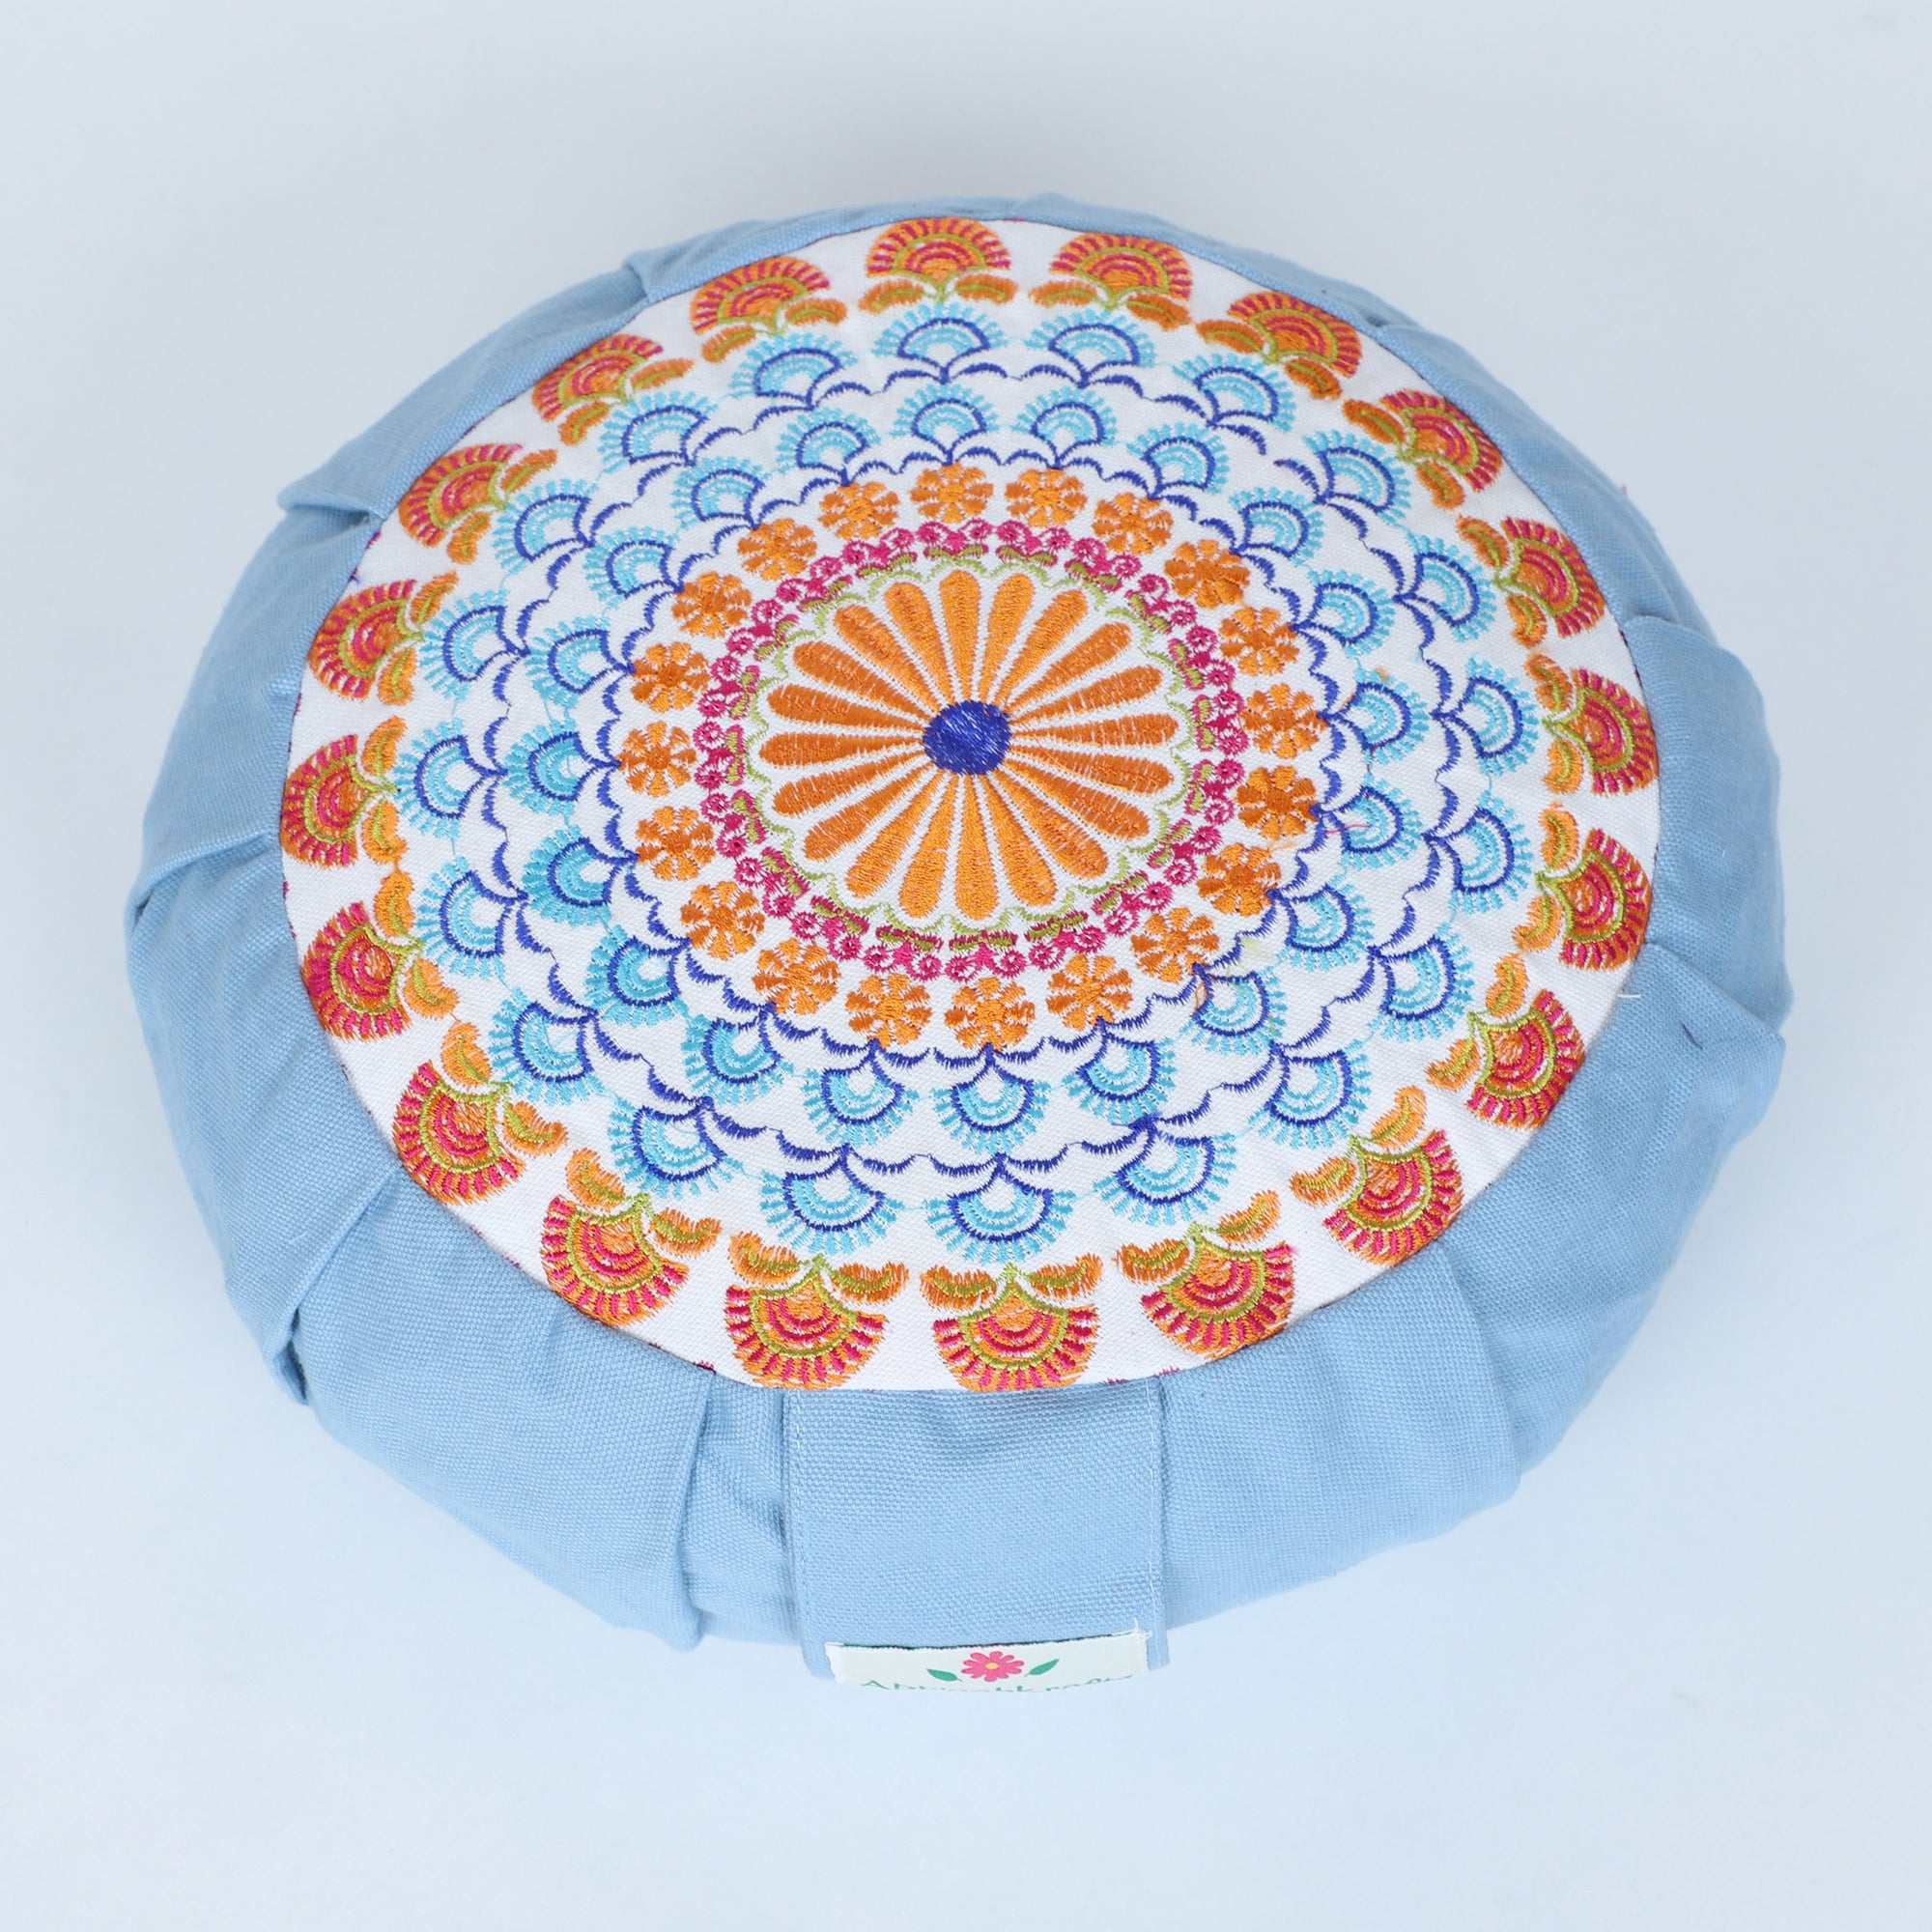 Embroidered Round Zafu Yoga Pillow |Zipped Cover |Washable| Portable - Gomti (Orange on Dust Blue) - Medium Size Limited Edition